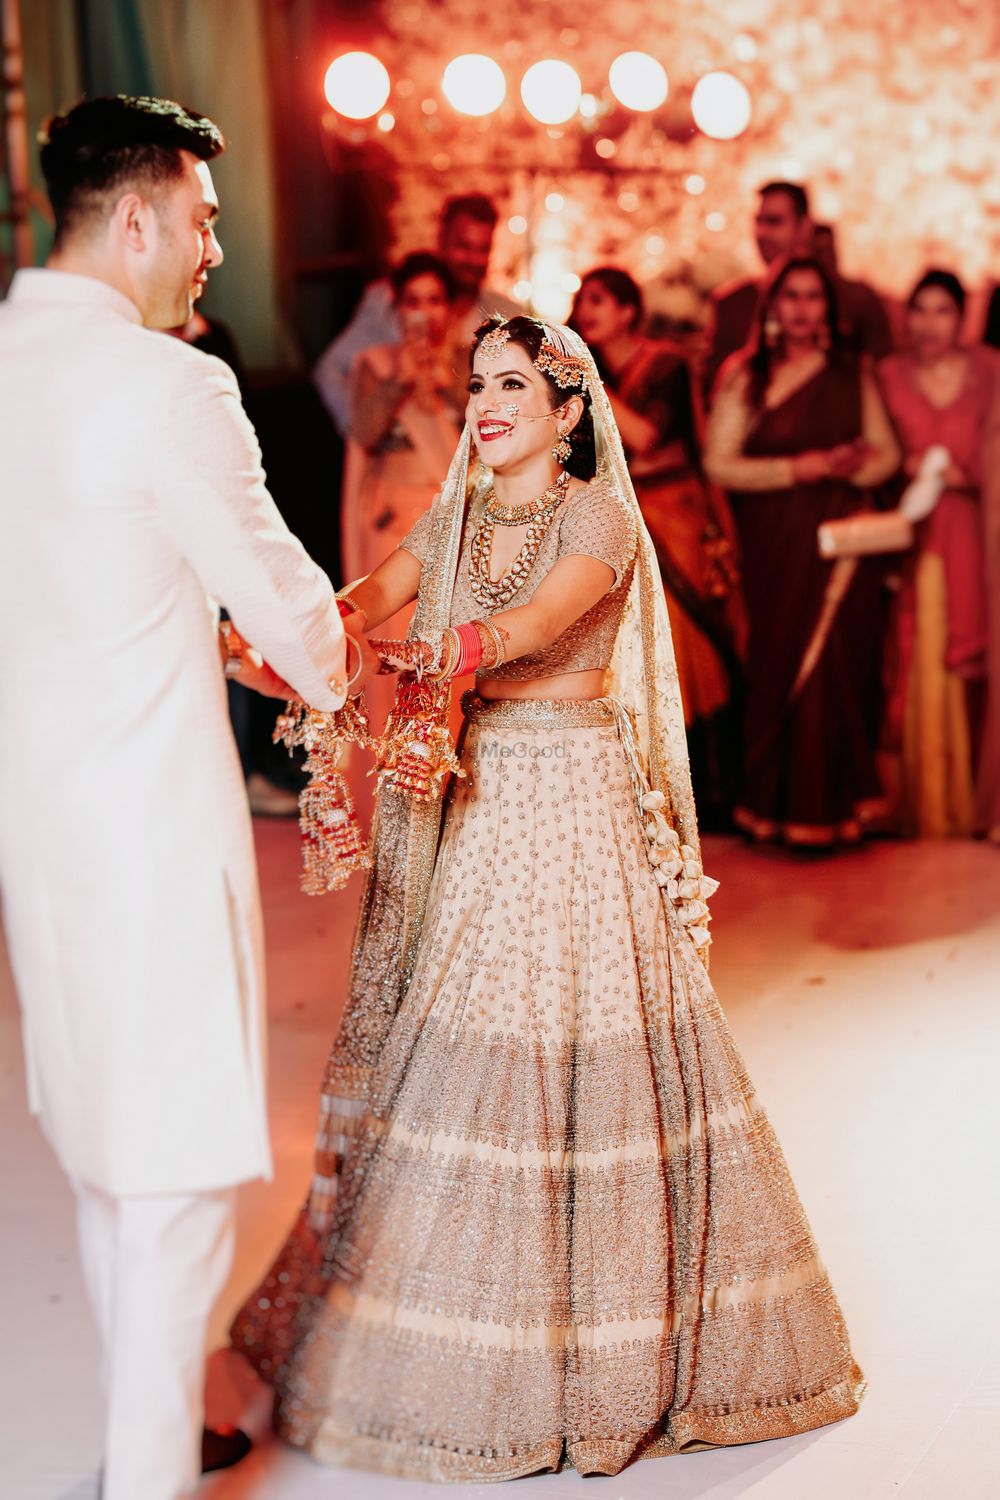 Photo of Happy bride and groom dancing shot